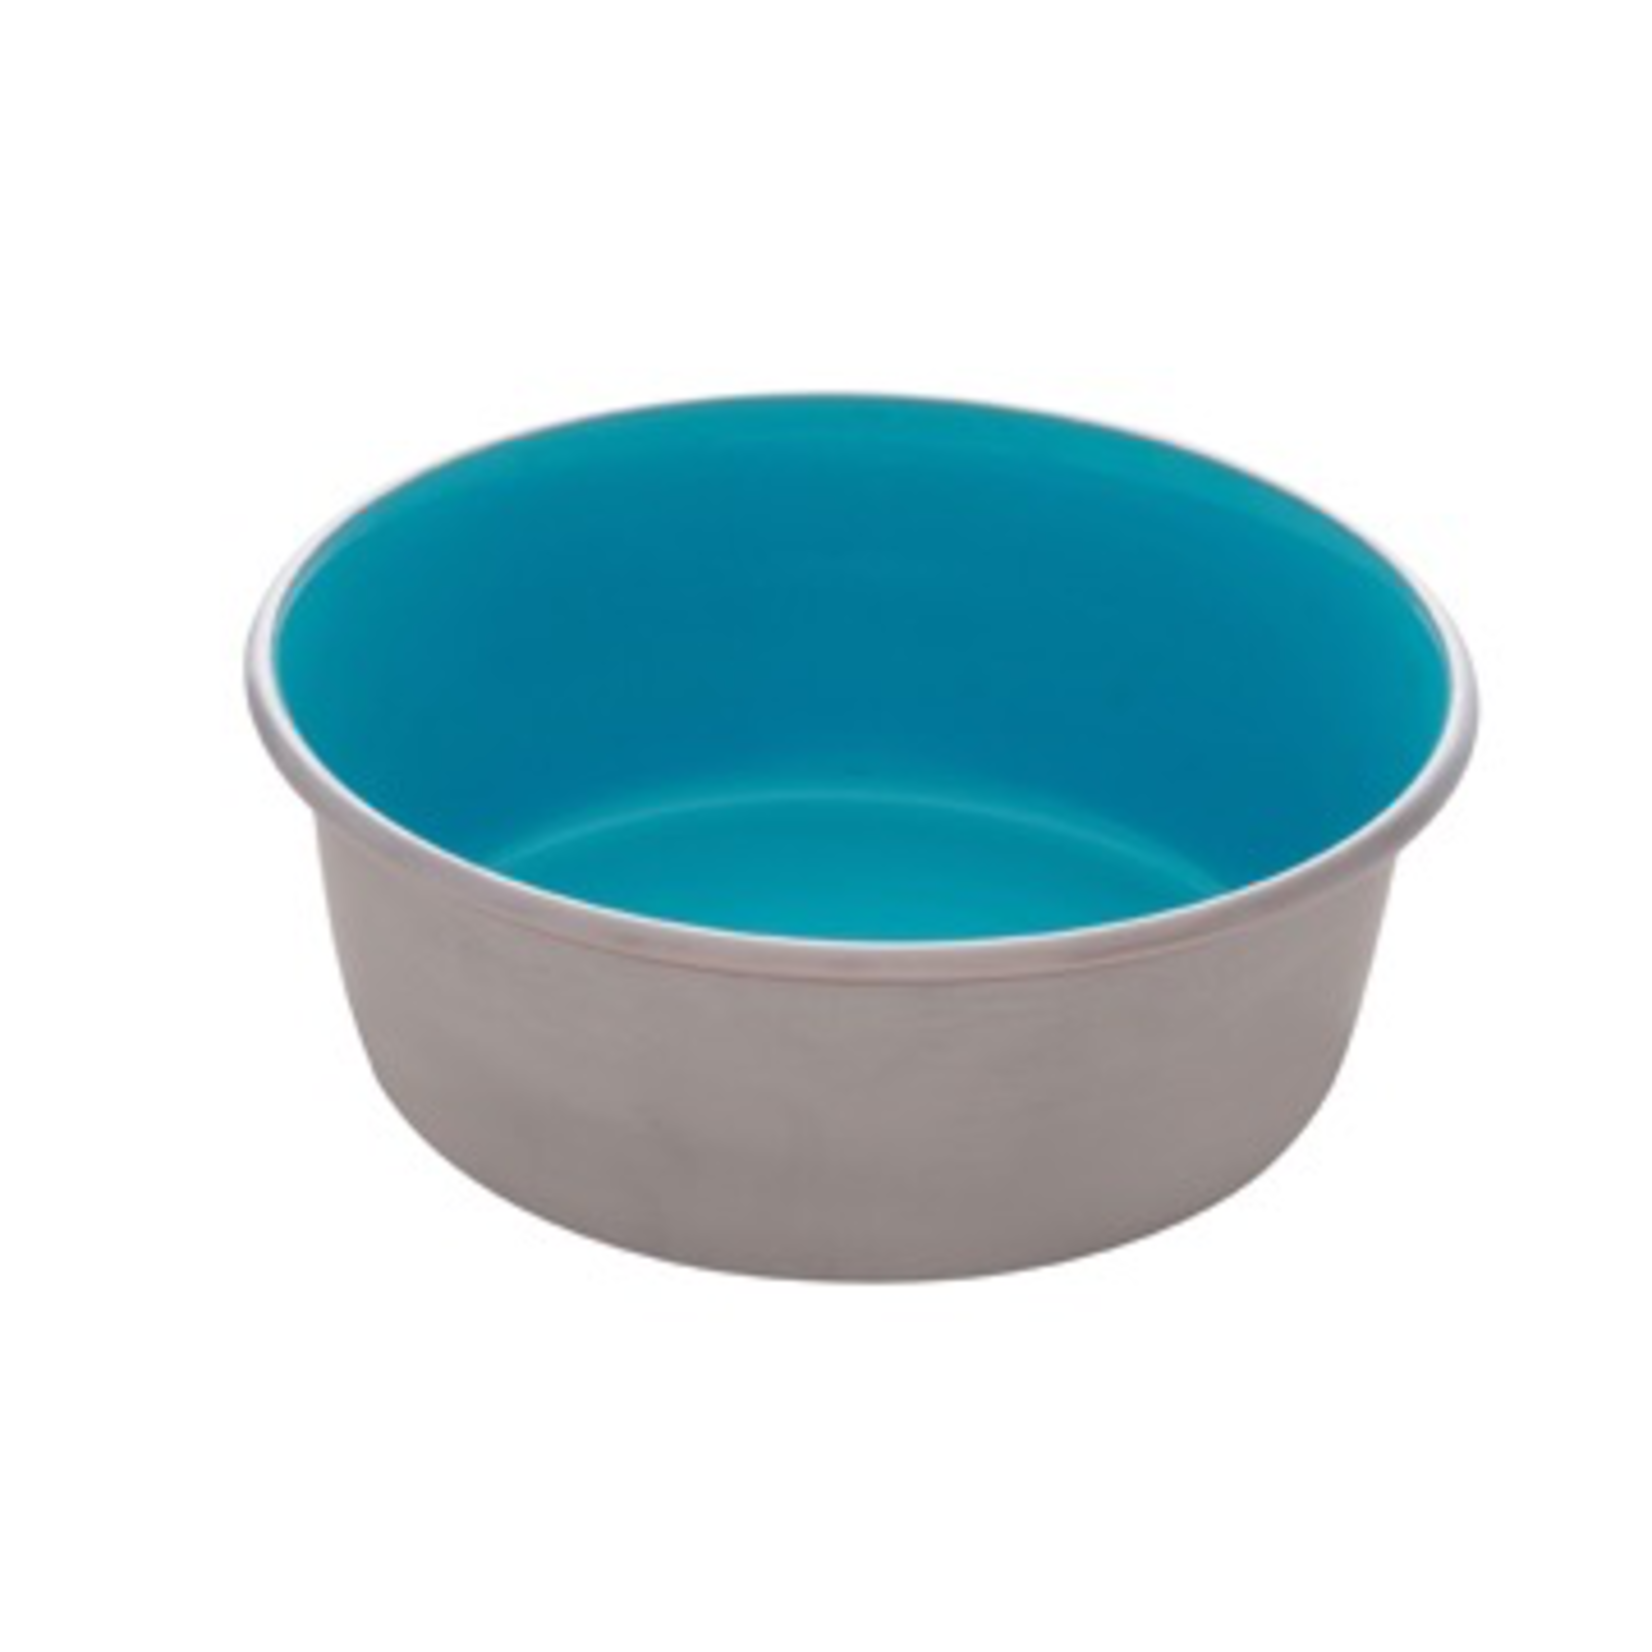 DOG IT (W) Dogit Stainless Steel Non-Skid Dog Bowl - Blue - 560 ml (19 fl.oz.)